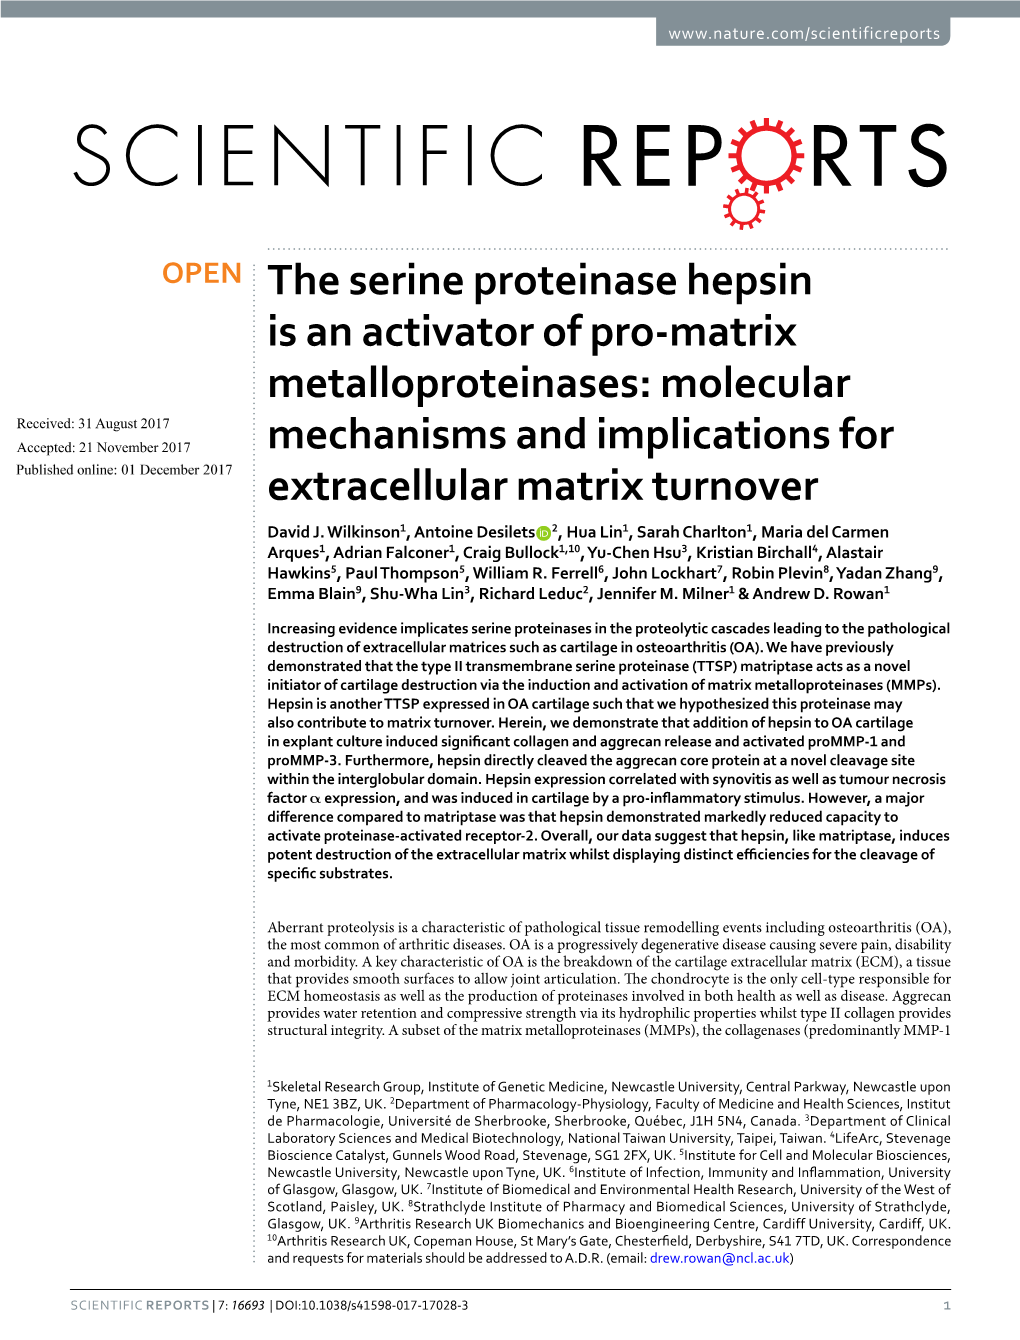 The Serine Proteinase Hepsin Is an Activator of Pro-Matrix